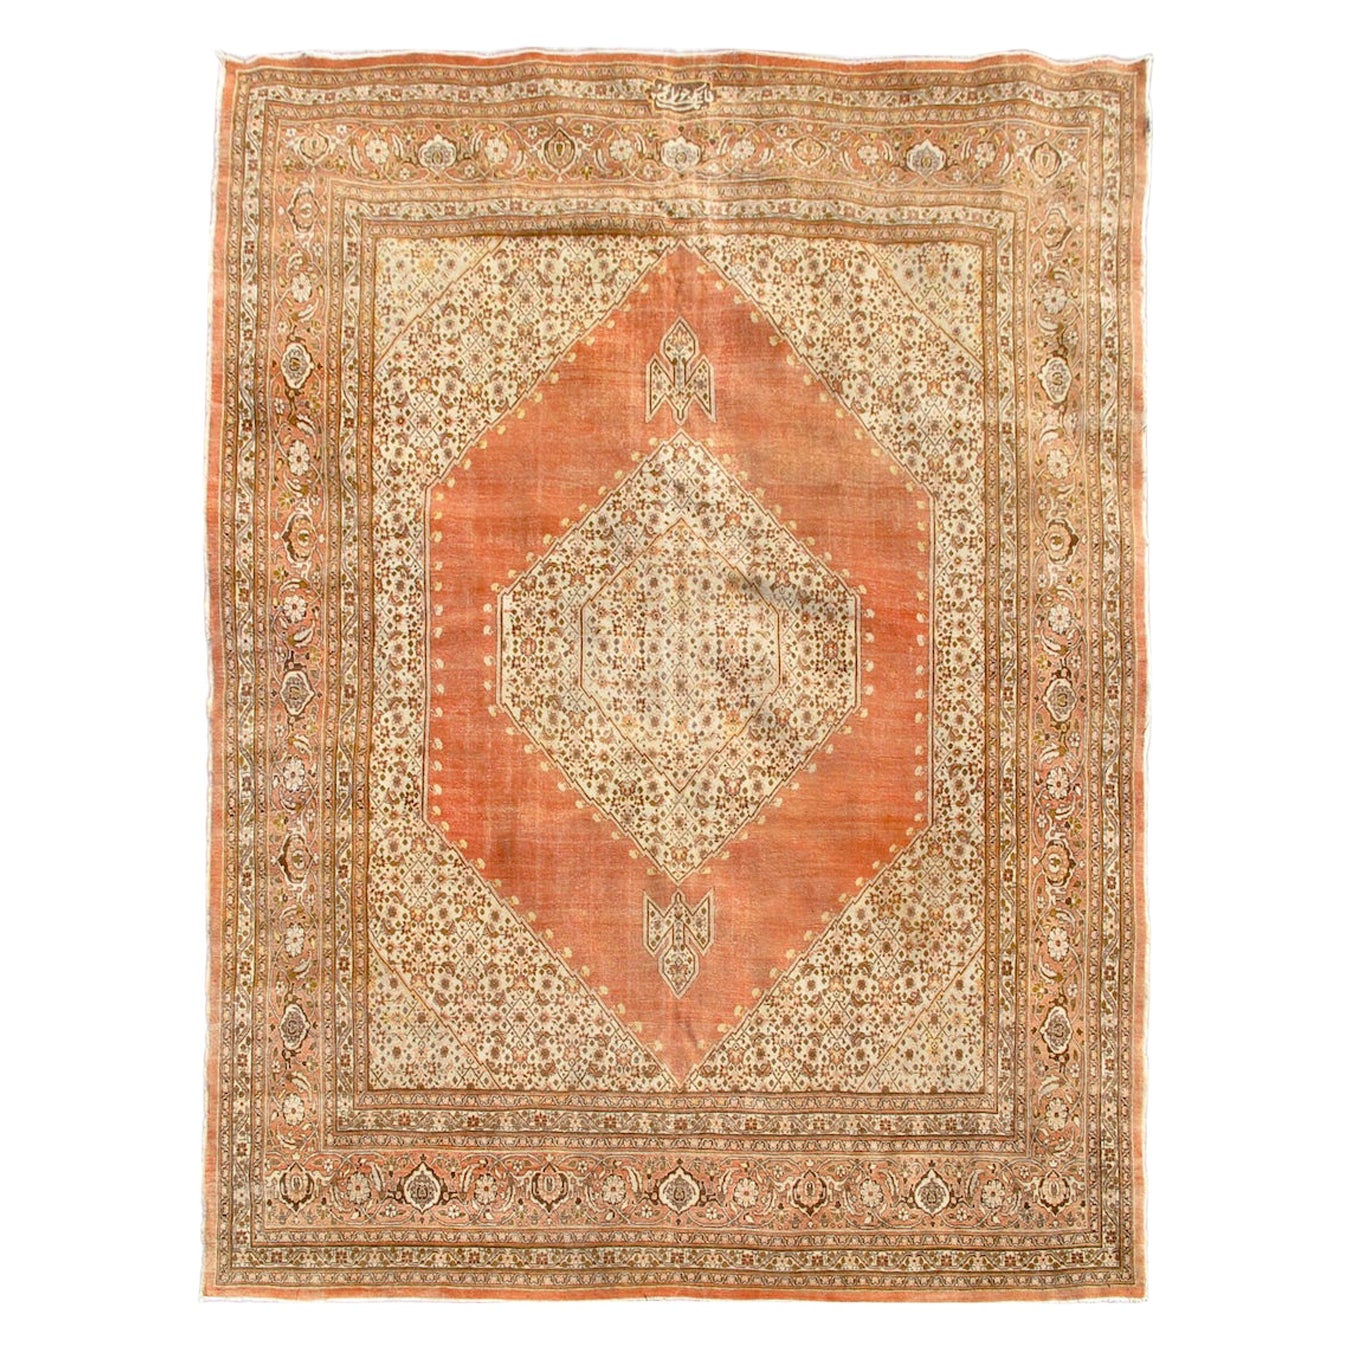 Antique Persian Tabriz Rug, c. 1900